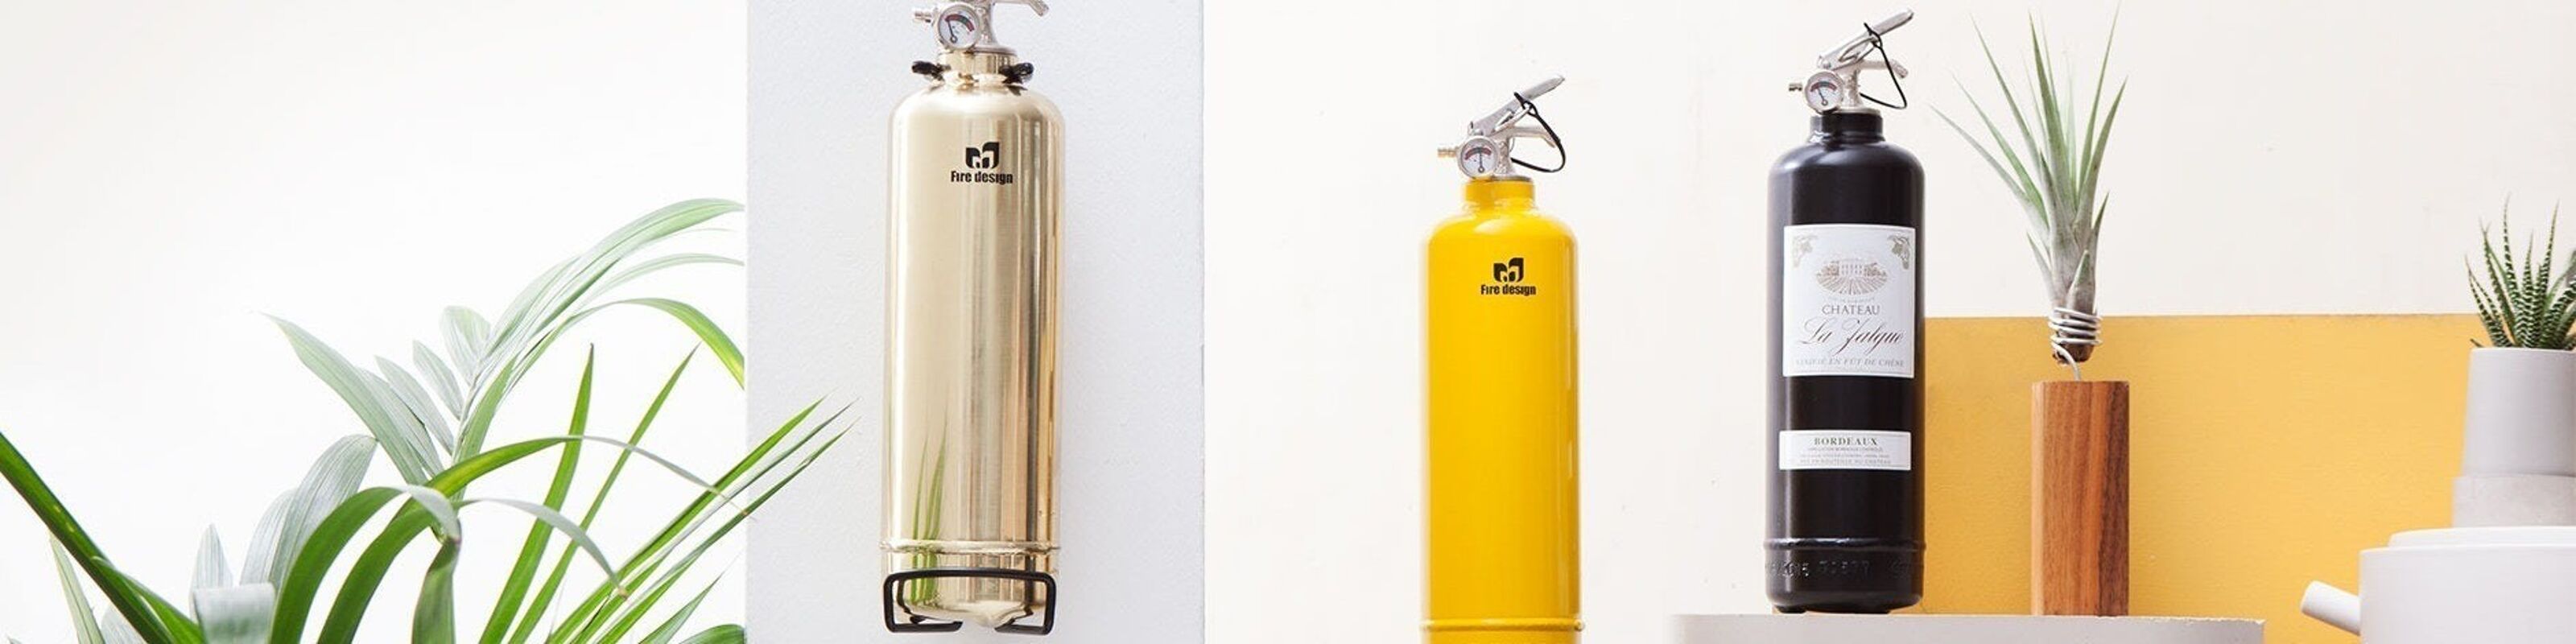 Buy a fire extinguisher design AKLH Paris N1 black - Fire design